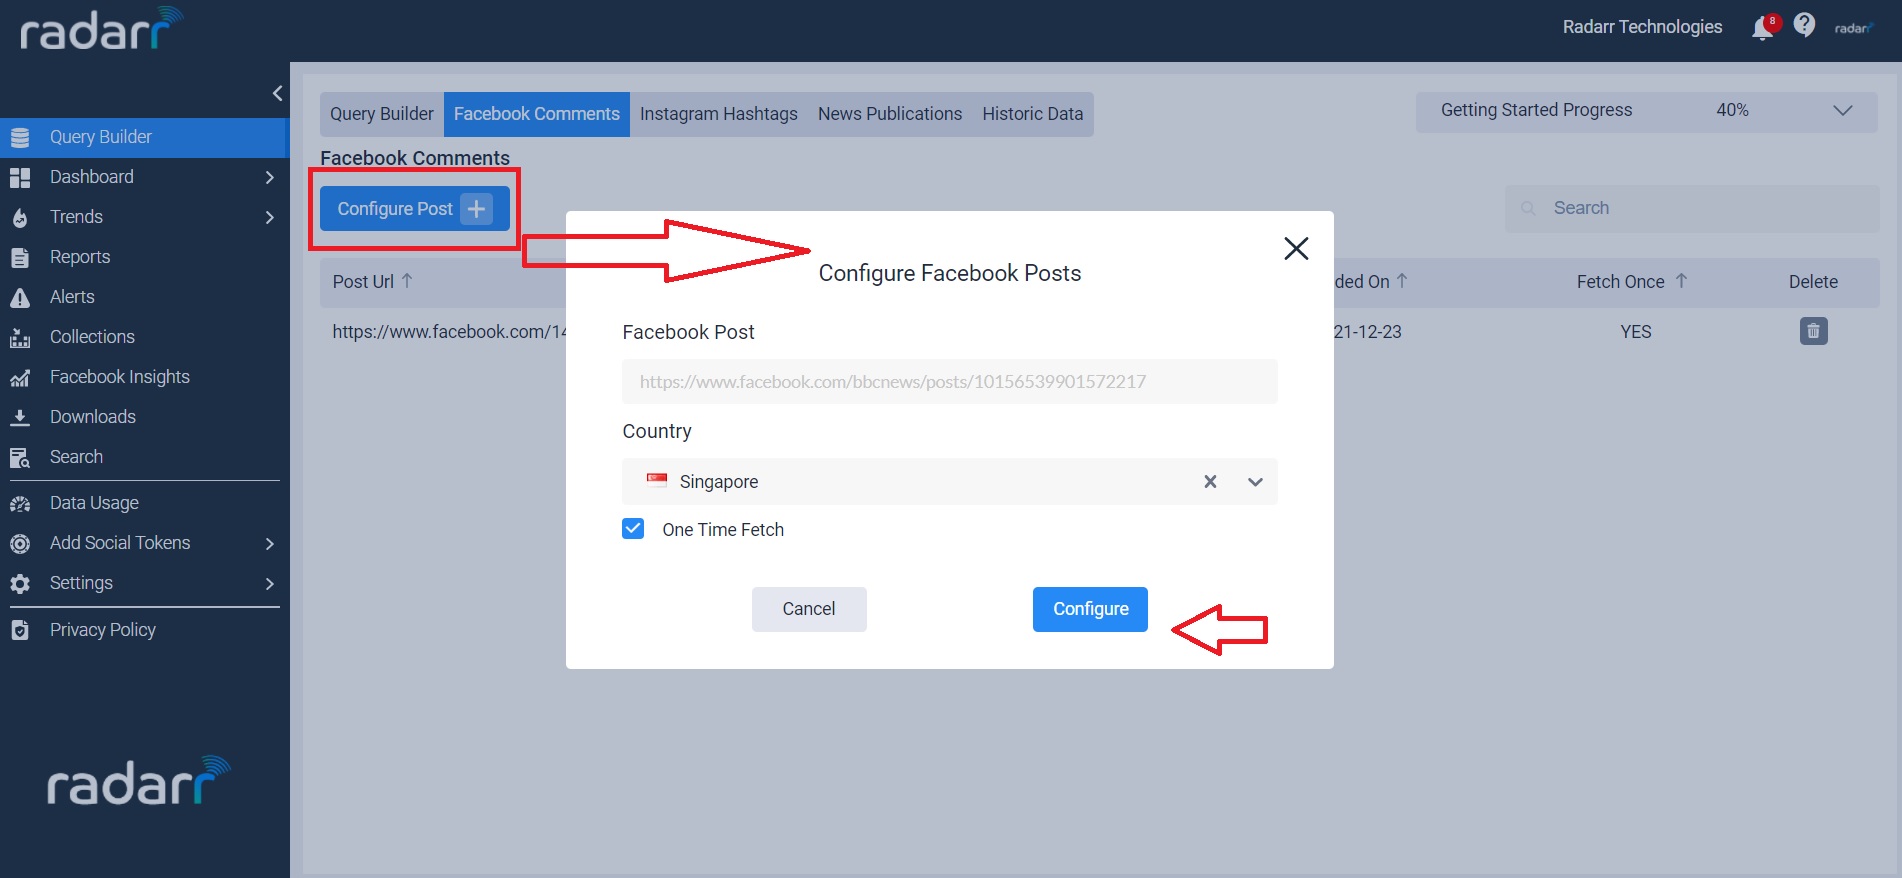 Configure Facebook Post in Radarr Dashboard